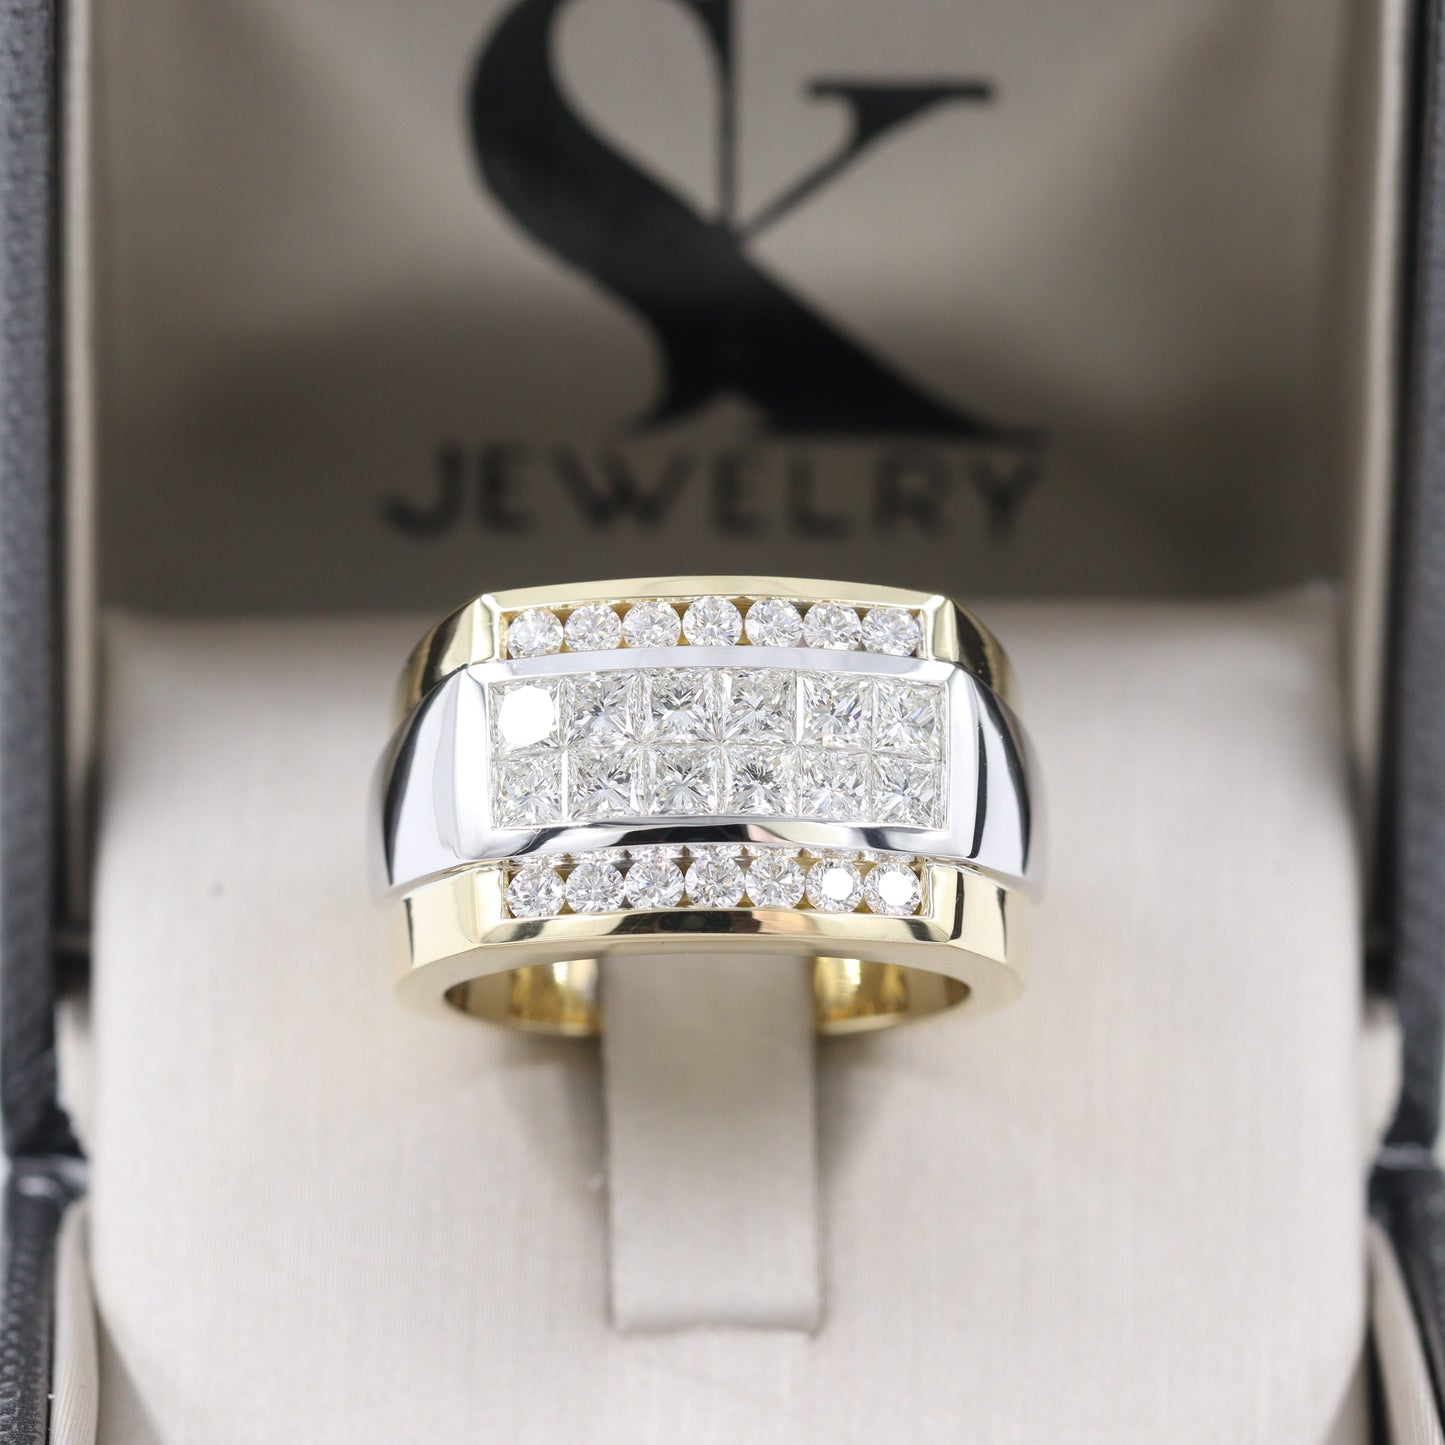 Princess Cut Diamond Invisible Set 2.75ct Men's Ring/Diamond Invisible Set Wedding Band/14K 18K gold Men's Diamond Ring/Anniversary gift